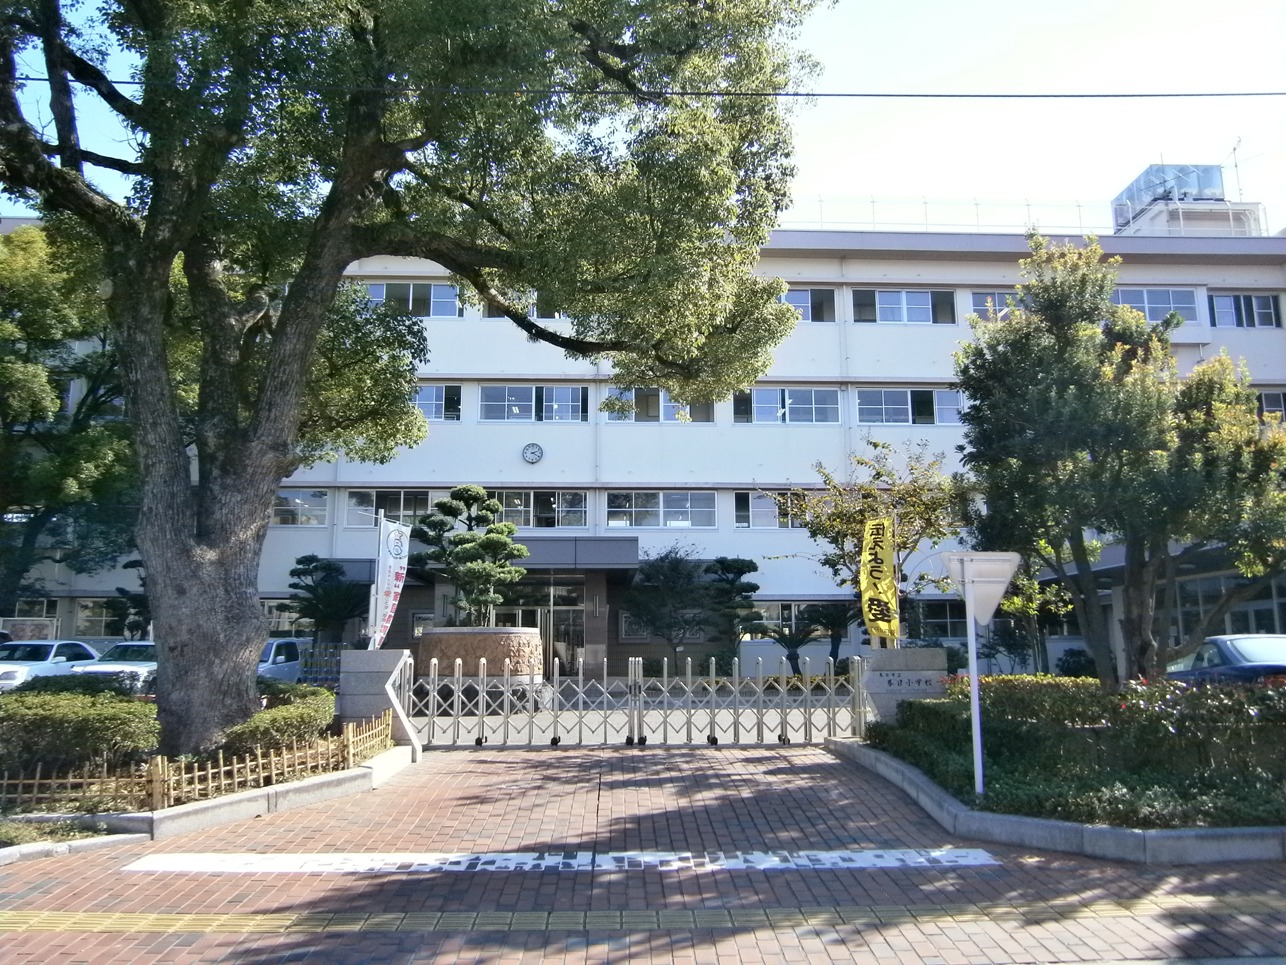 Primary school. Kasuga Municipal Kasuga elementary school (elementary school) up to 400m